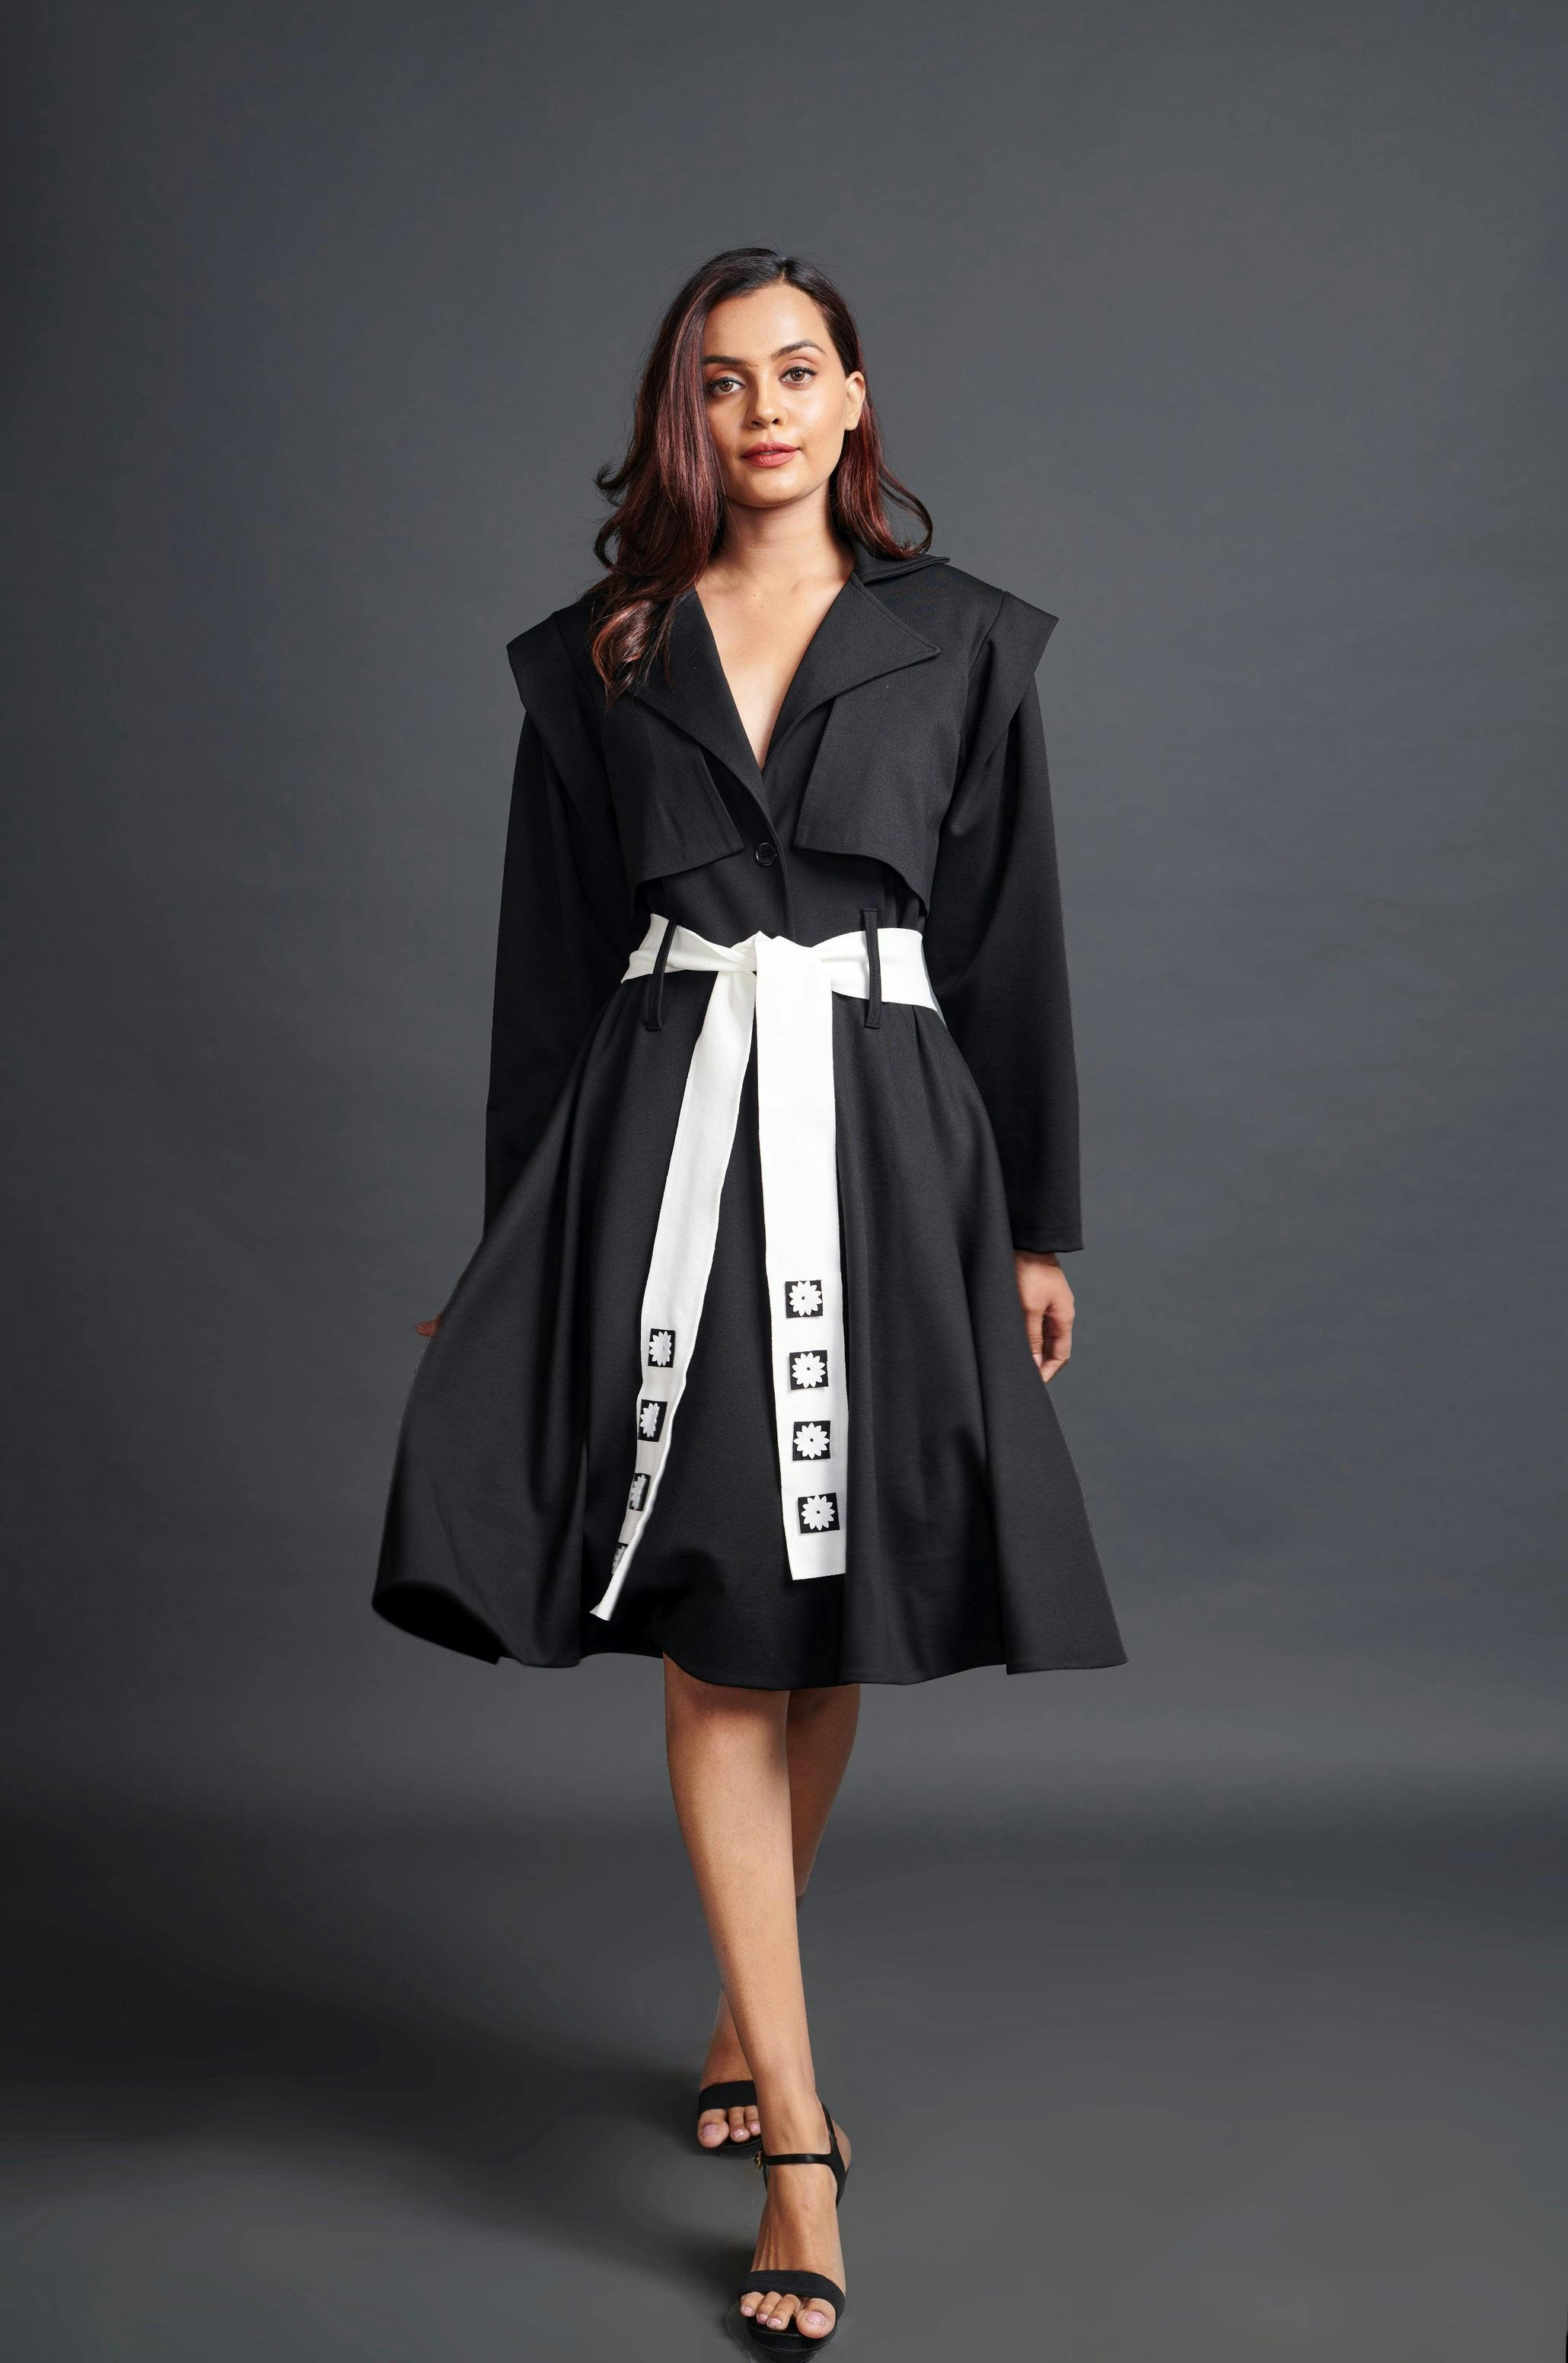 WF-1110-BLACK ::: Black Jacket Dress With Sash Belt, a product by Deepika Arora